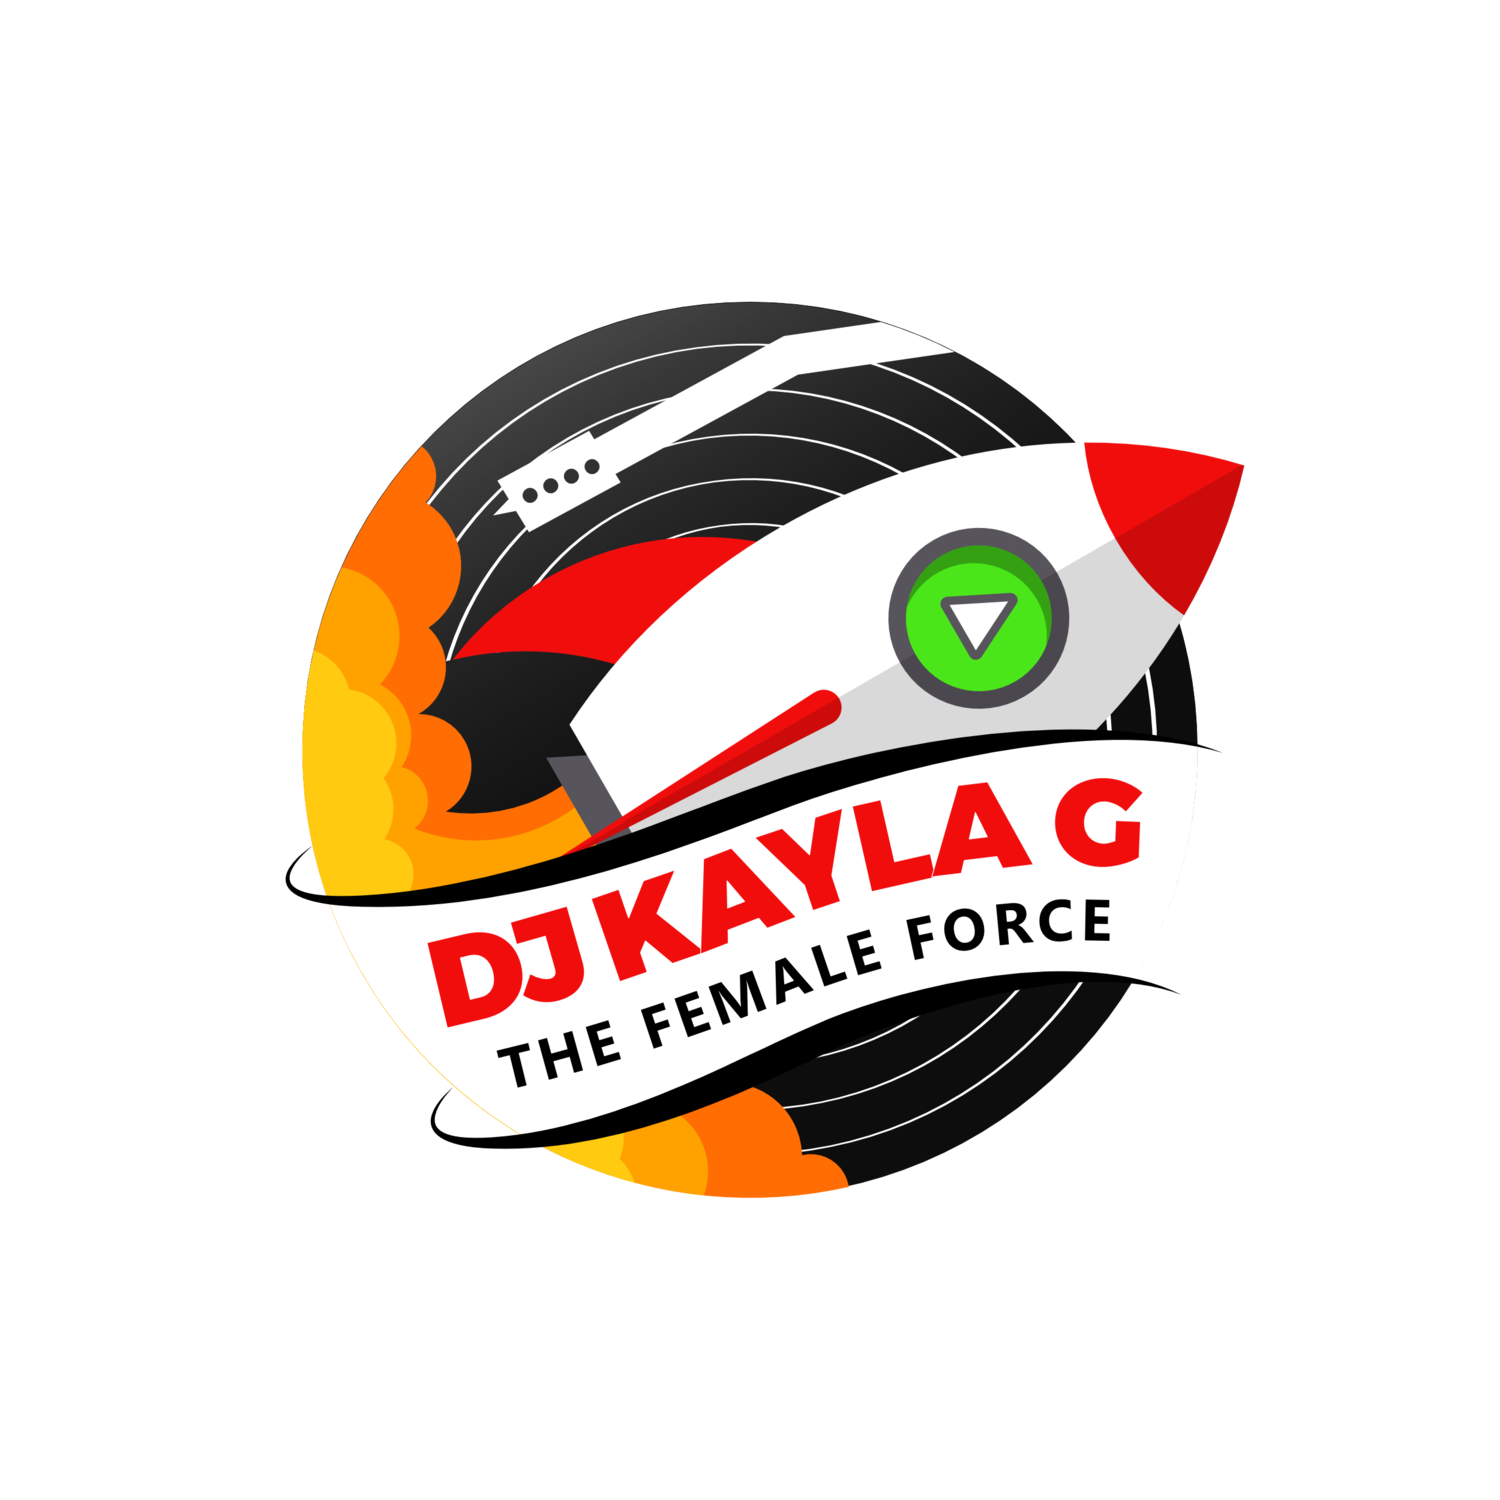 DJ Kayla G - THE FEMALE FORCE, LLC.